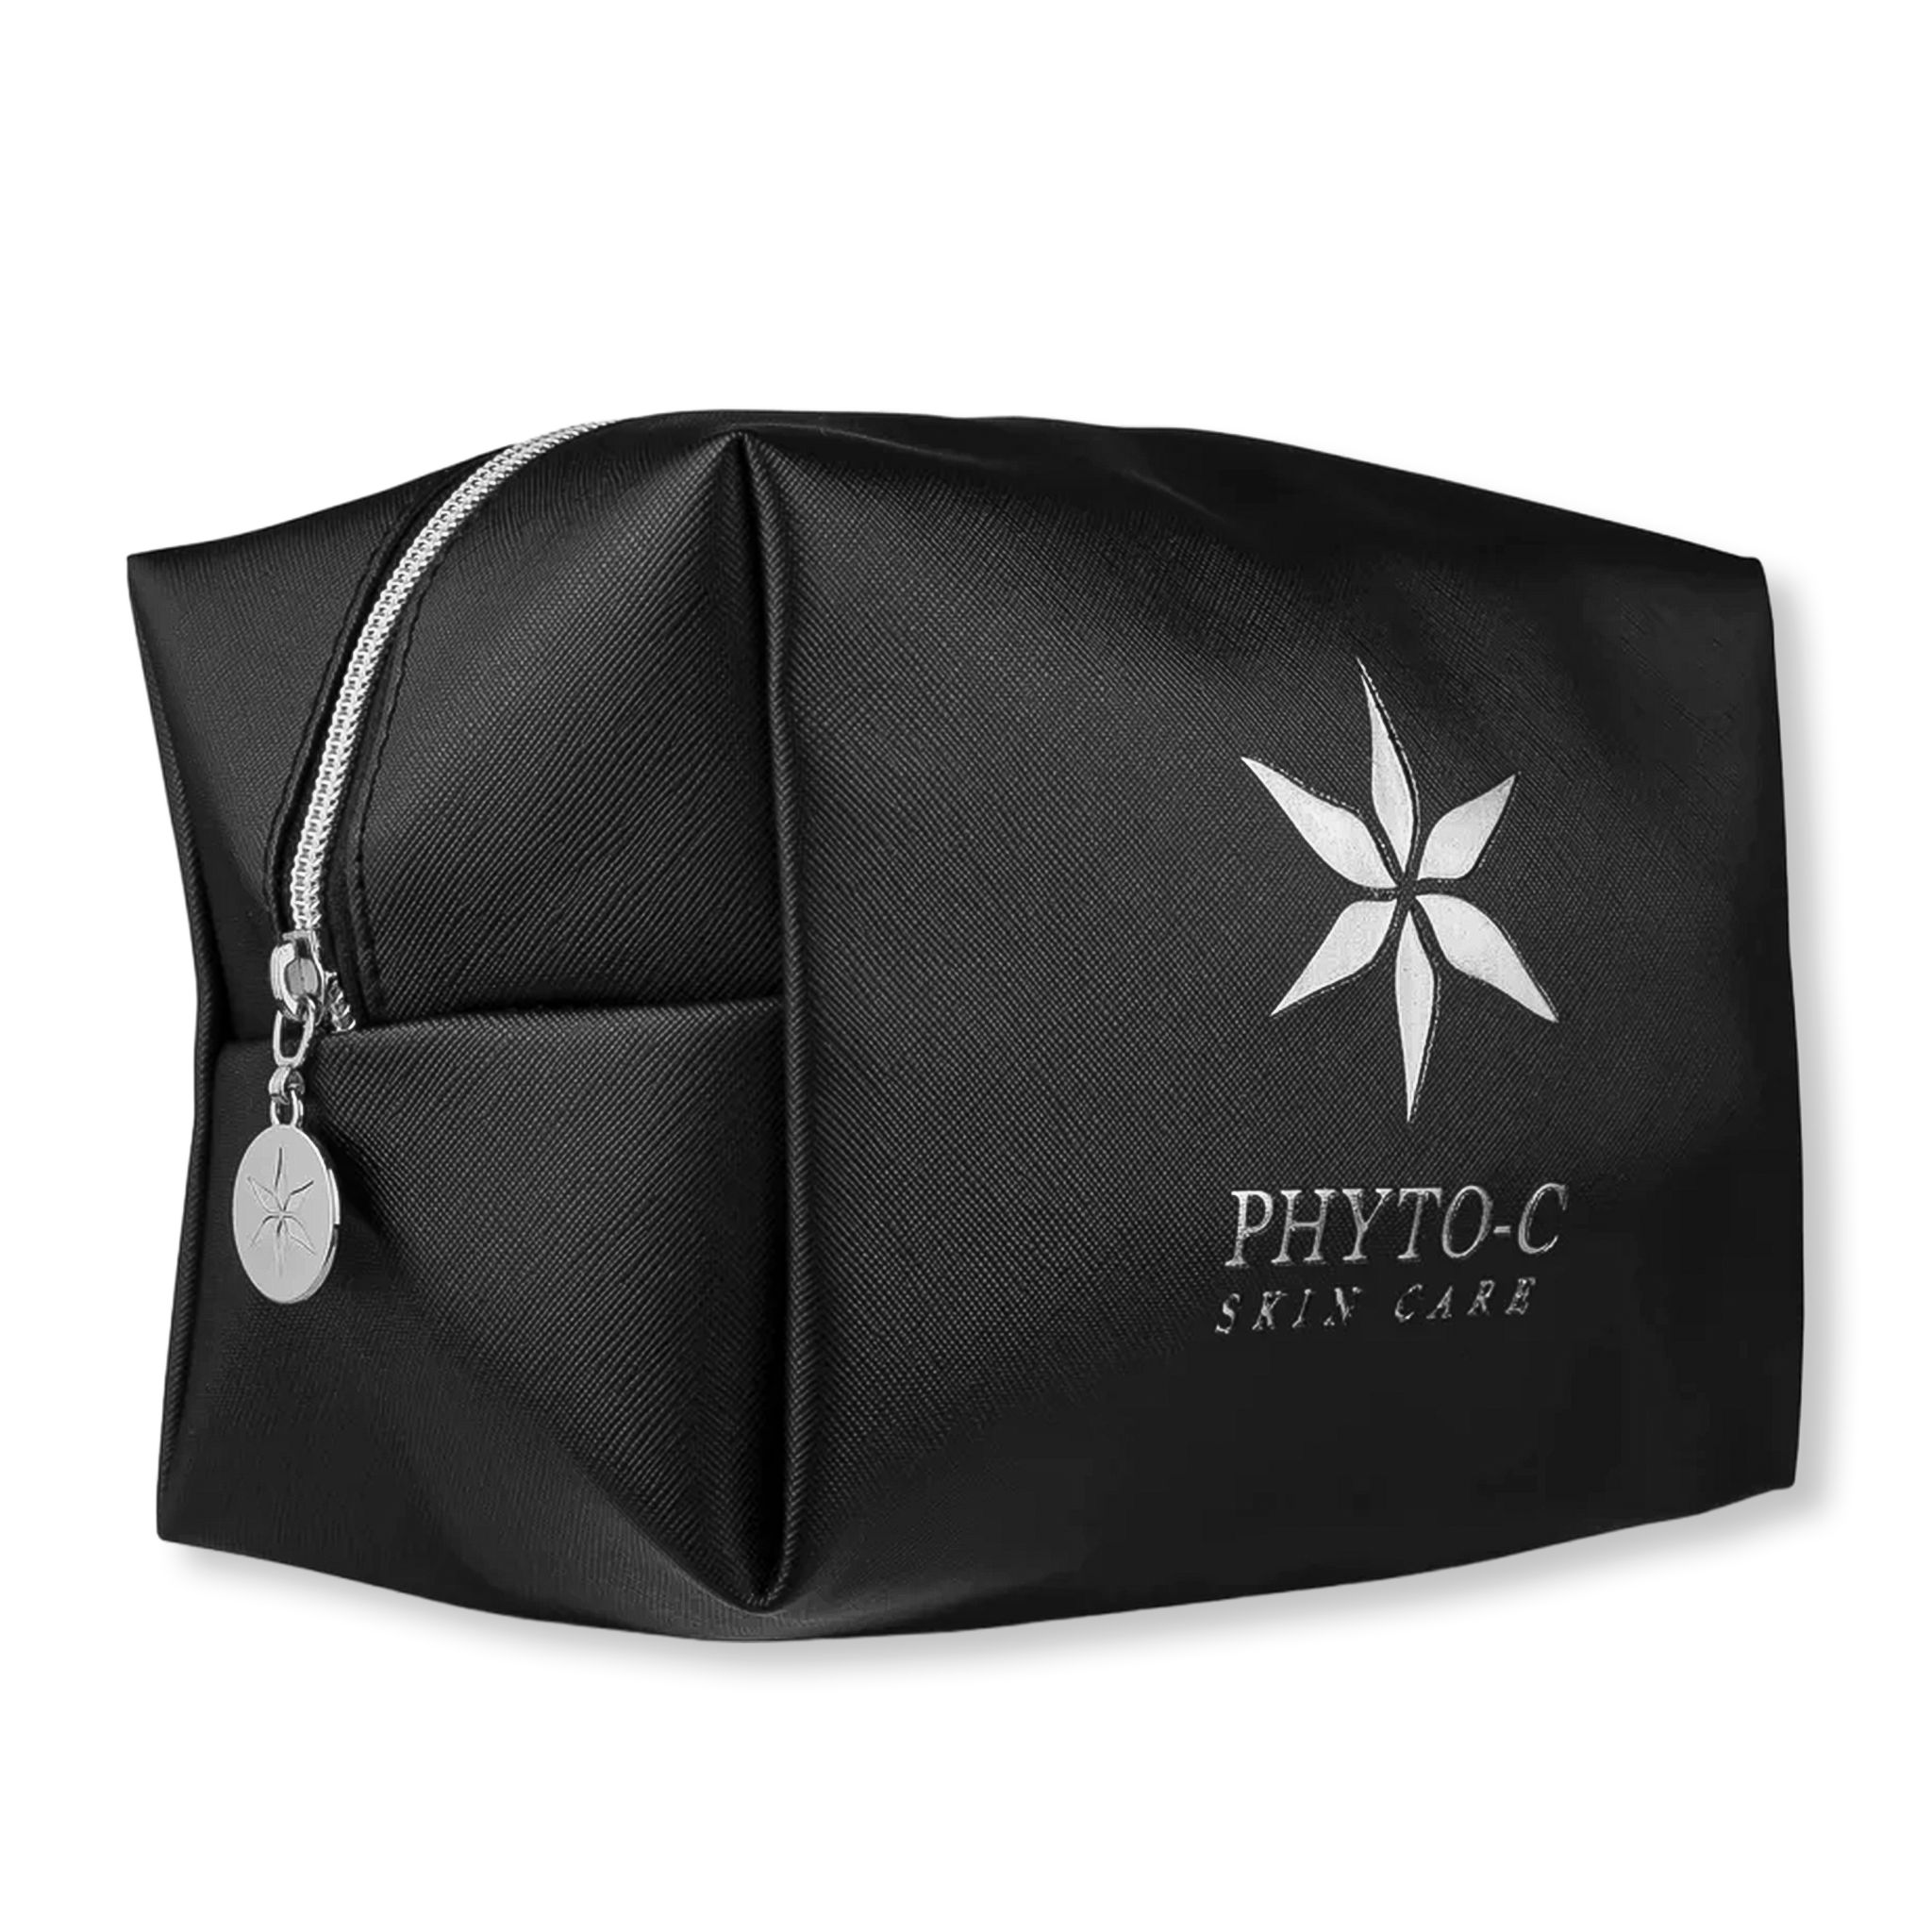 Phyto-C Black Gift Bag